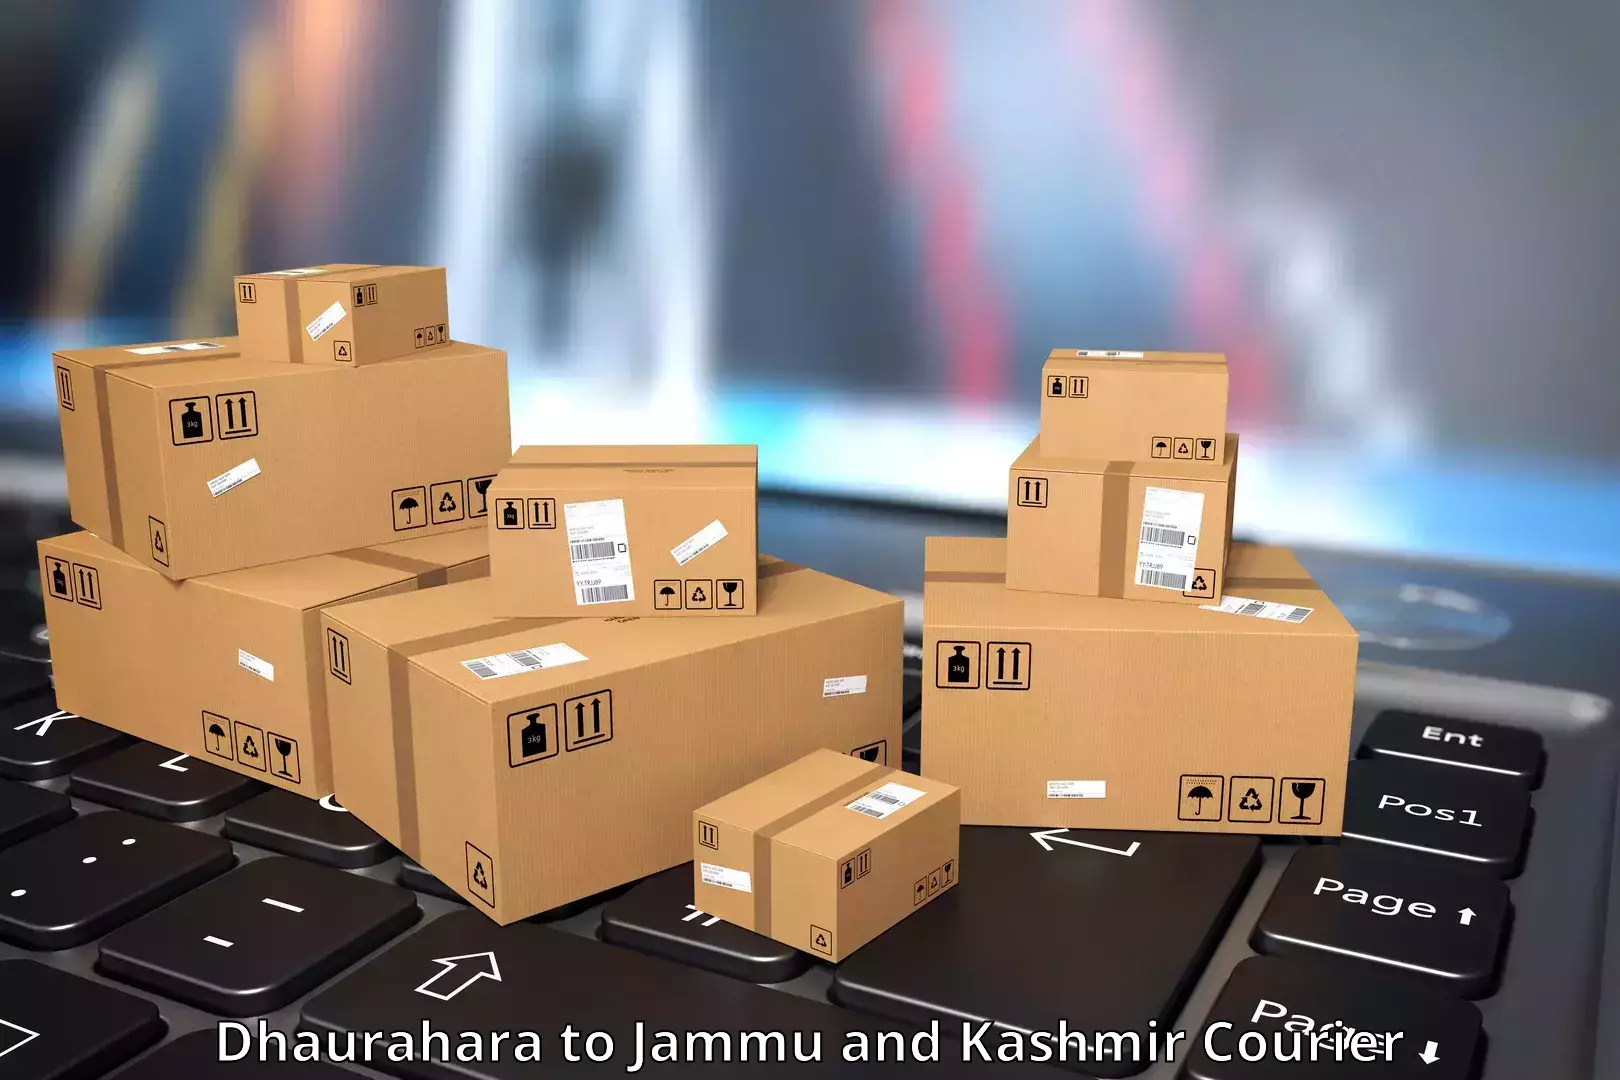 Cash on delivery service Dhaurahara to Kargil